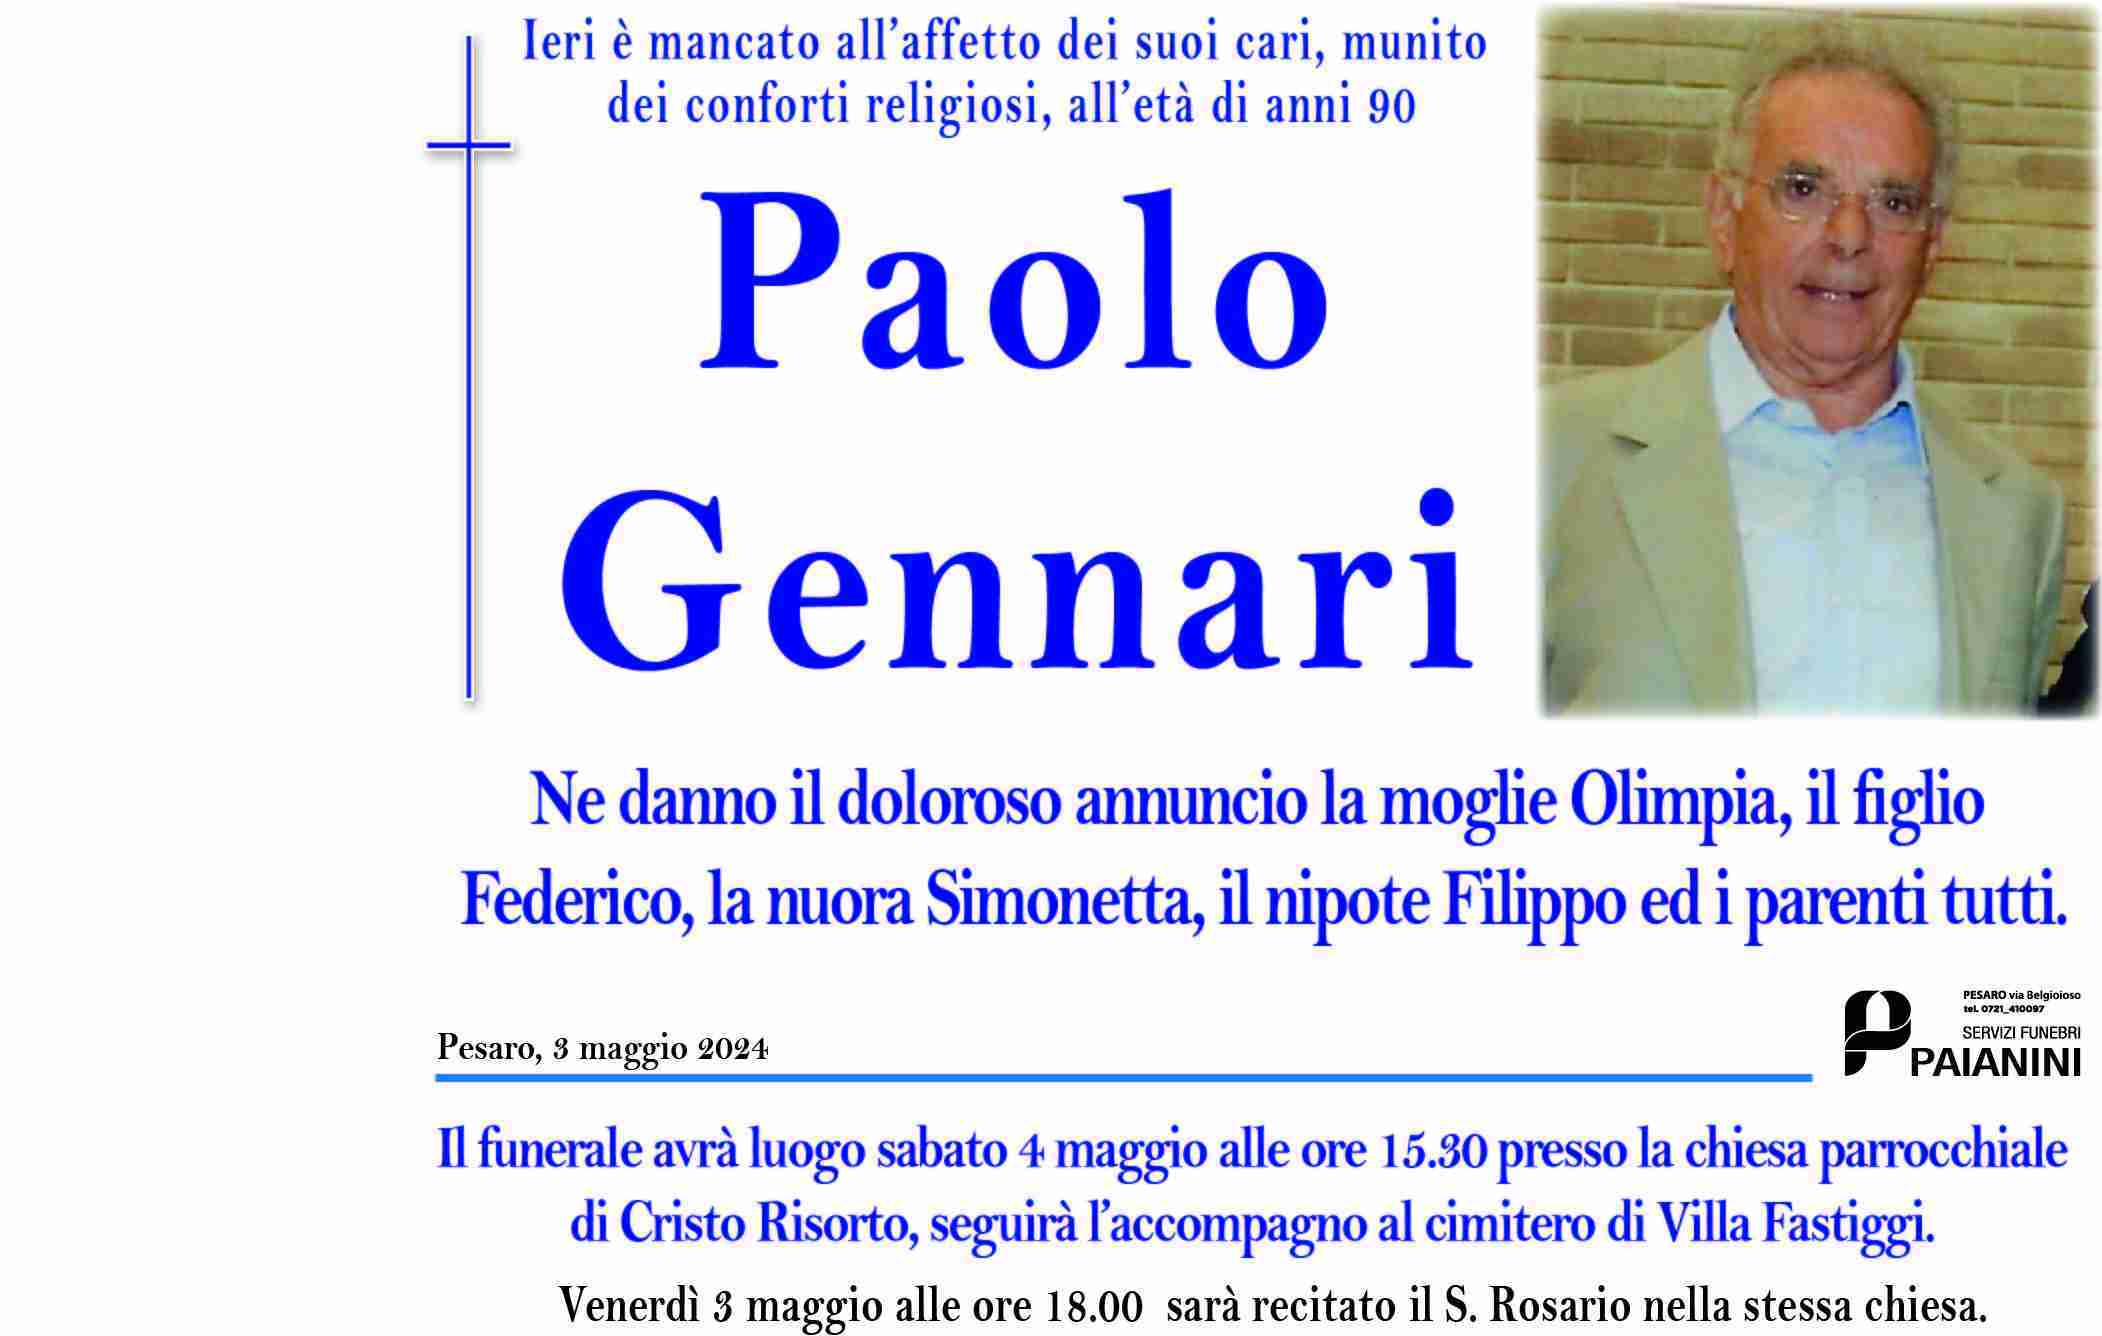 Paolo Gennari